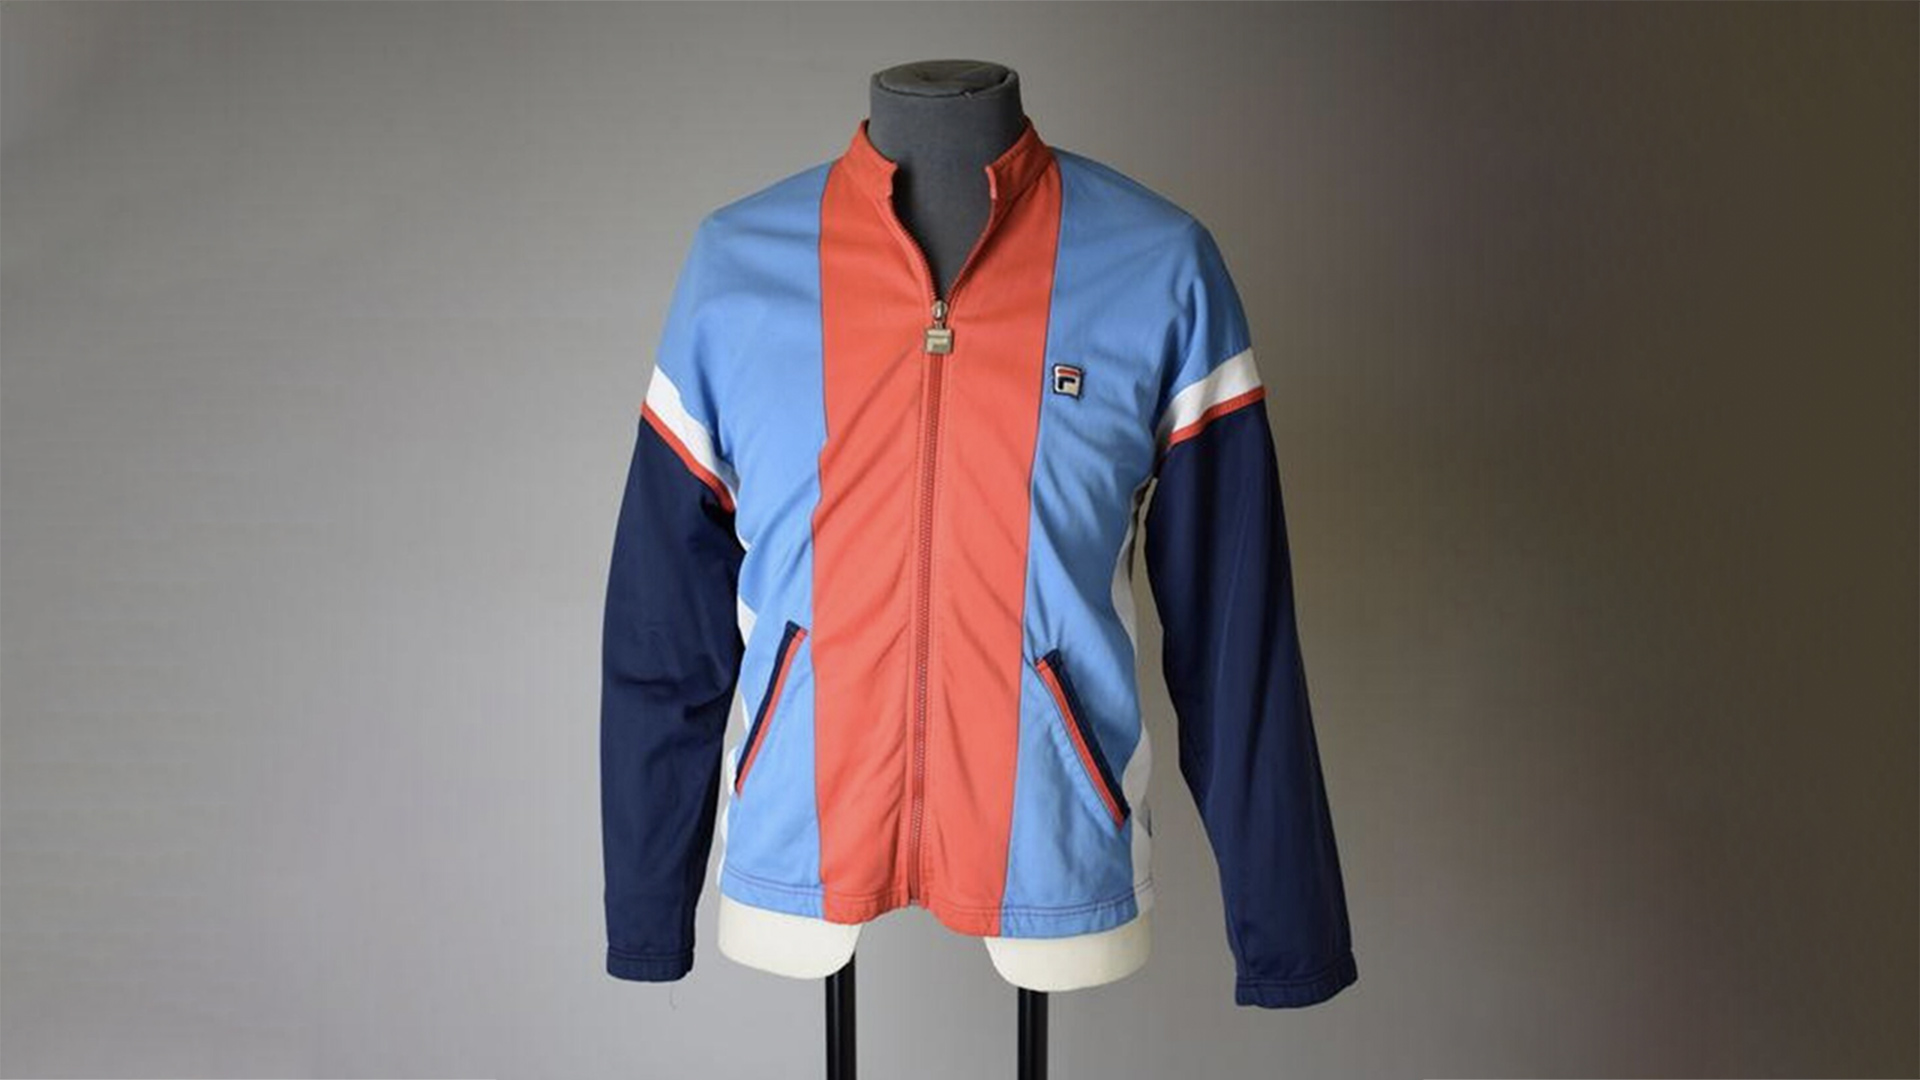 Blue and orange striped Fila jacket